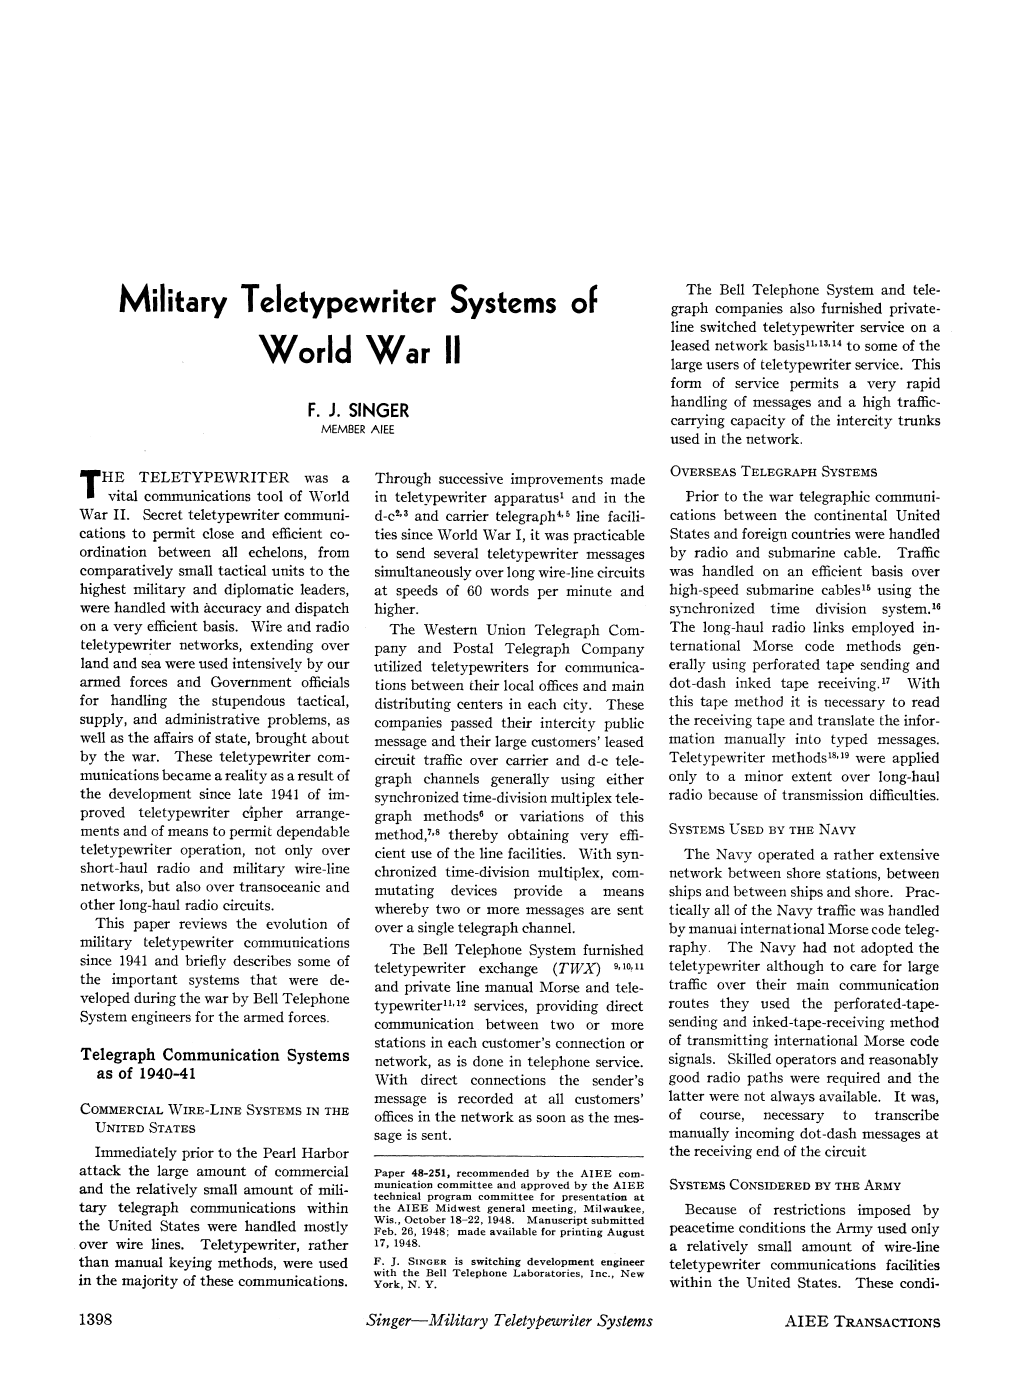 Military Teletypewriter Systems of World War II